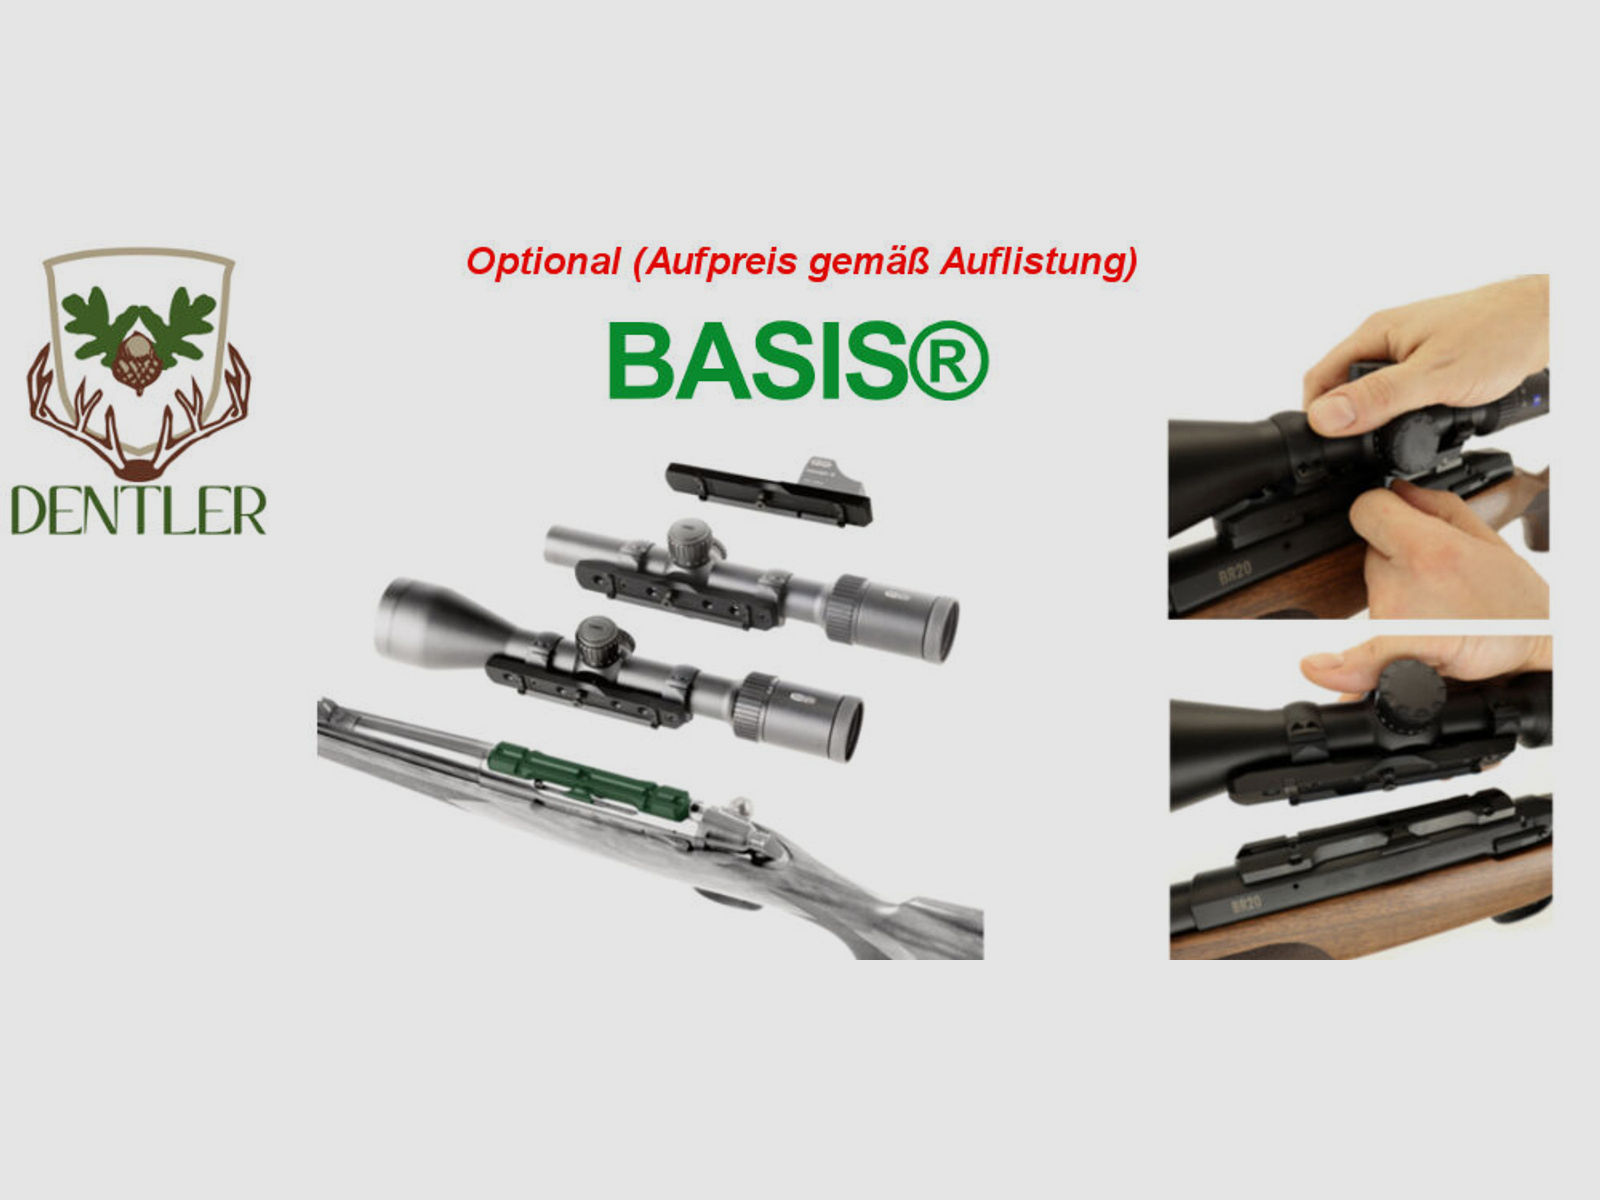 Brenner Komplettpaket:	 BR20 B&H Prohunter Lochschaft DDoptics 2.5-16x42 oder 2.5-15x50 Jagd Repetierer